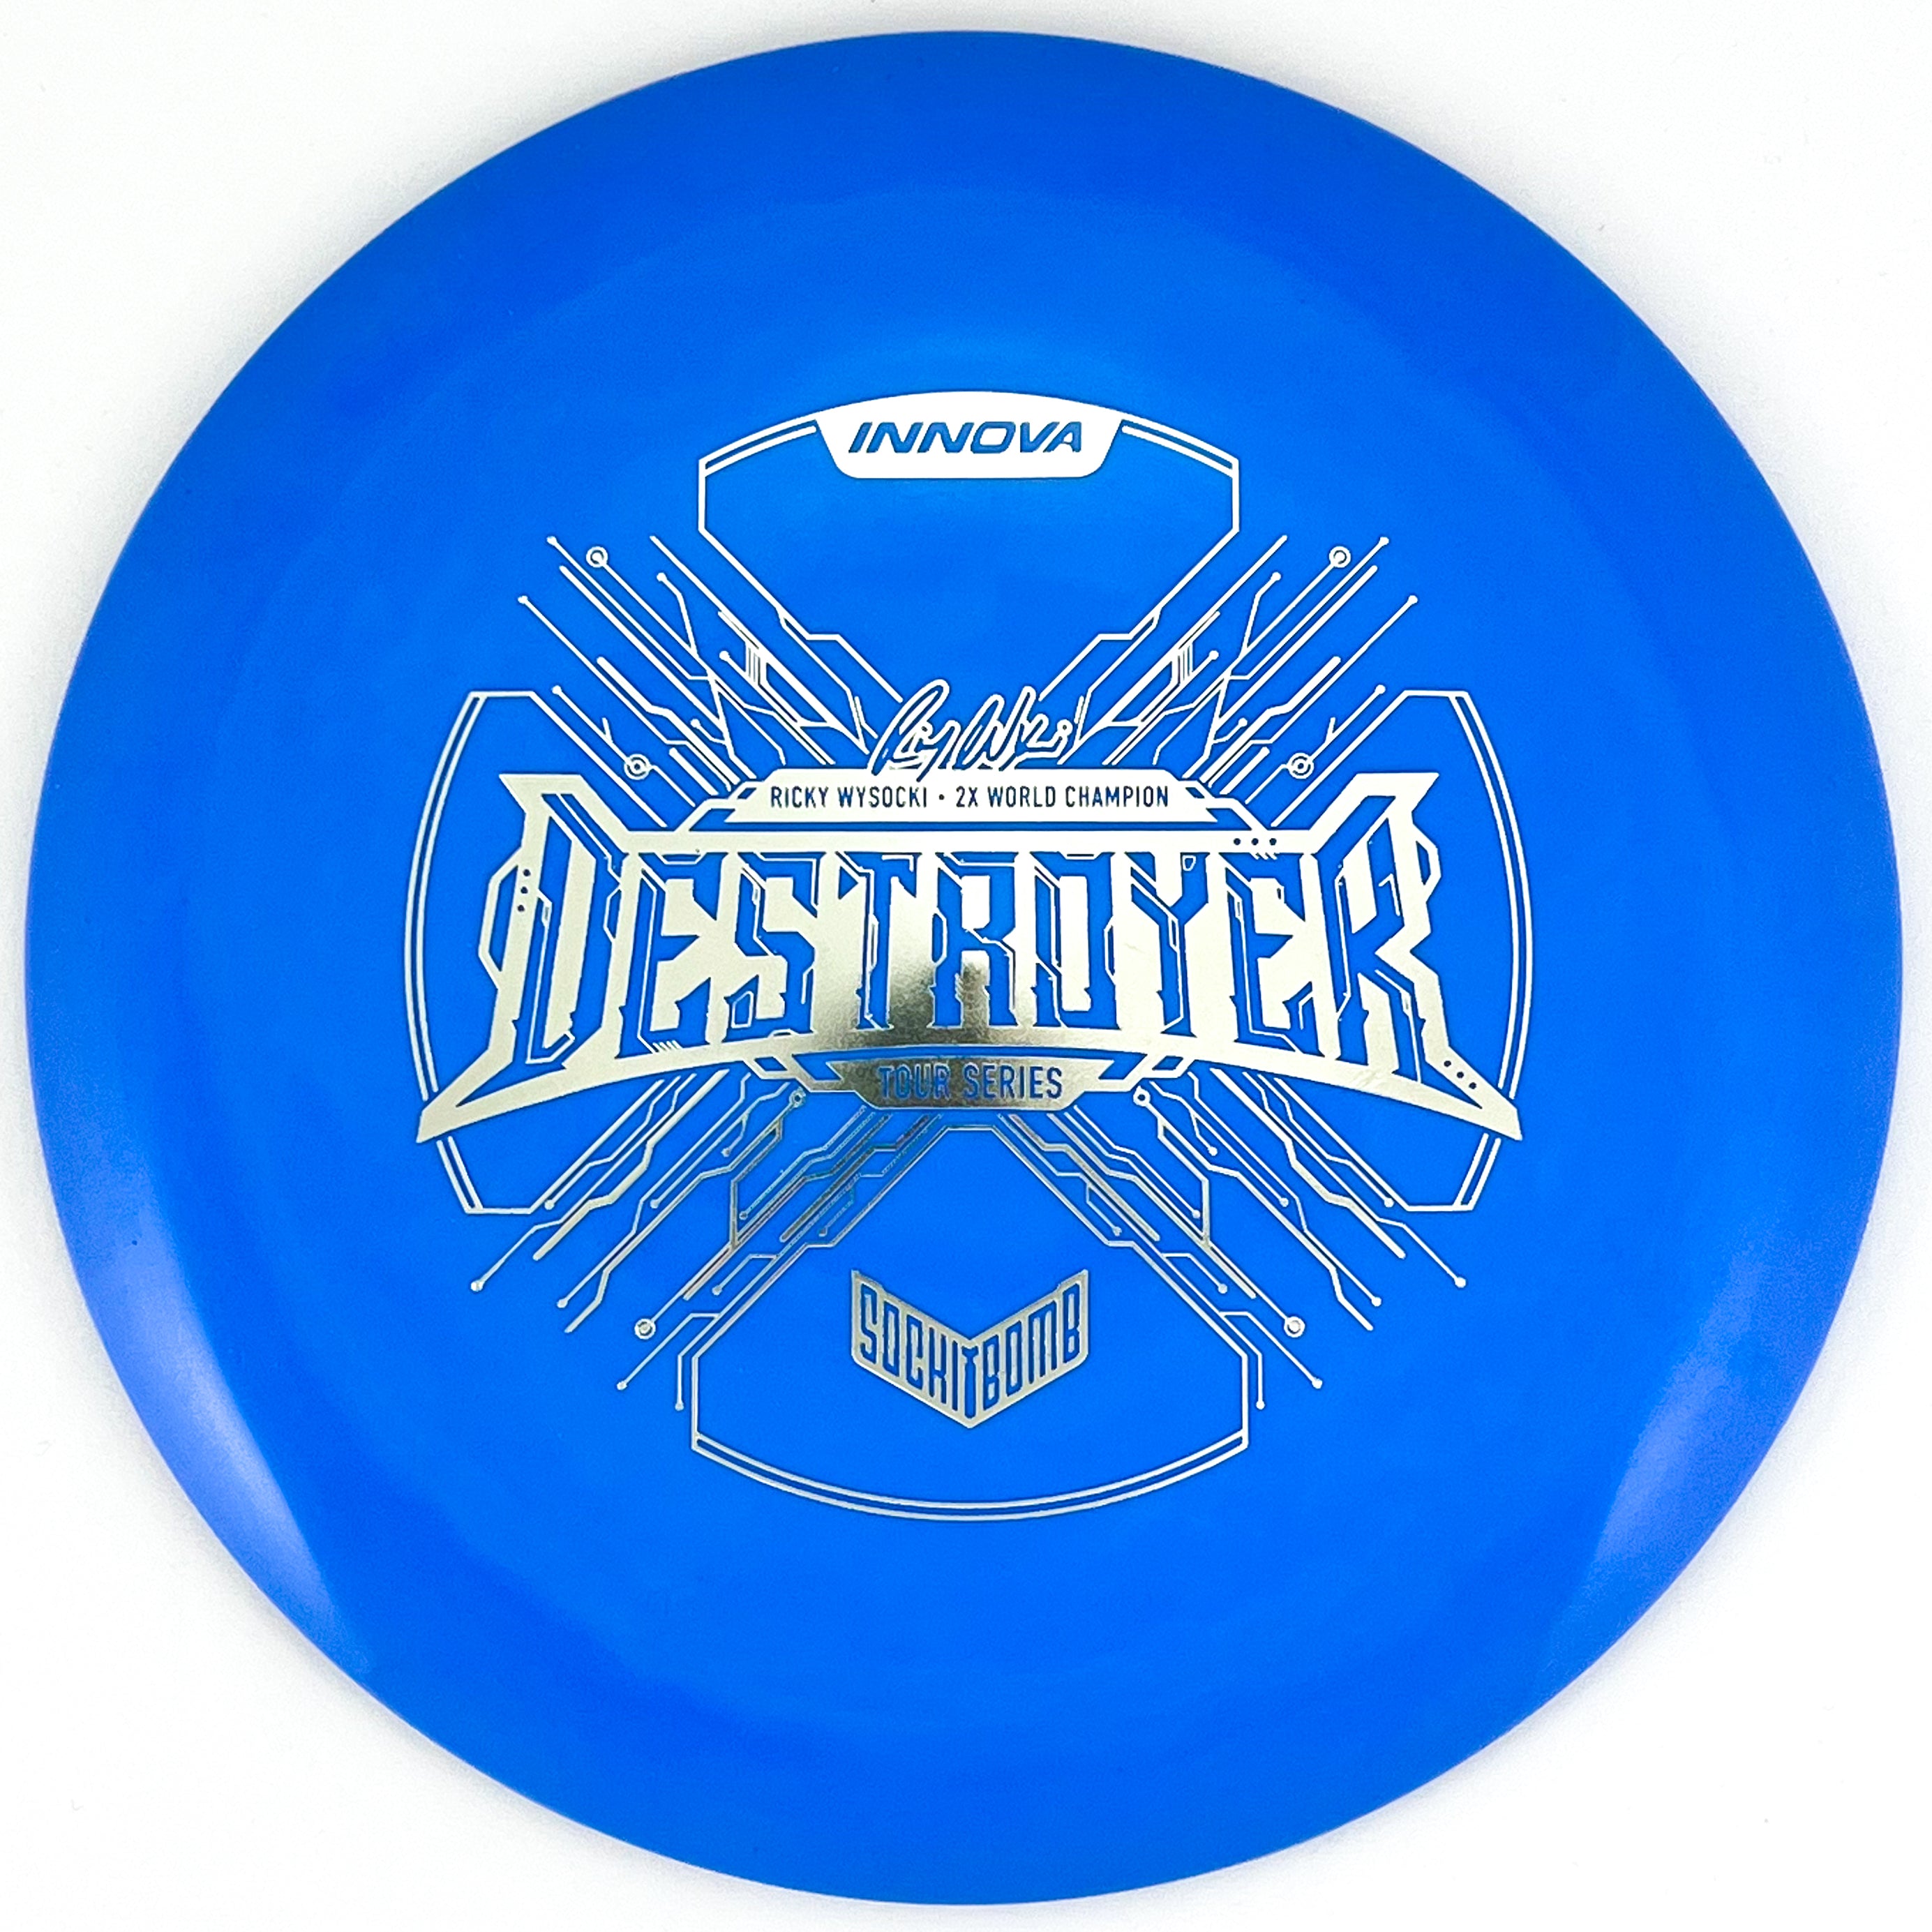 Blue 2021 Ricky Wysocki Tour Series 'SockiBomb' Destroyer disc golf distance driver by Innova Champion Discs.